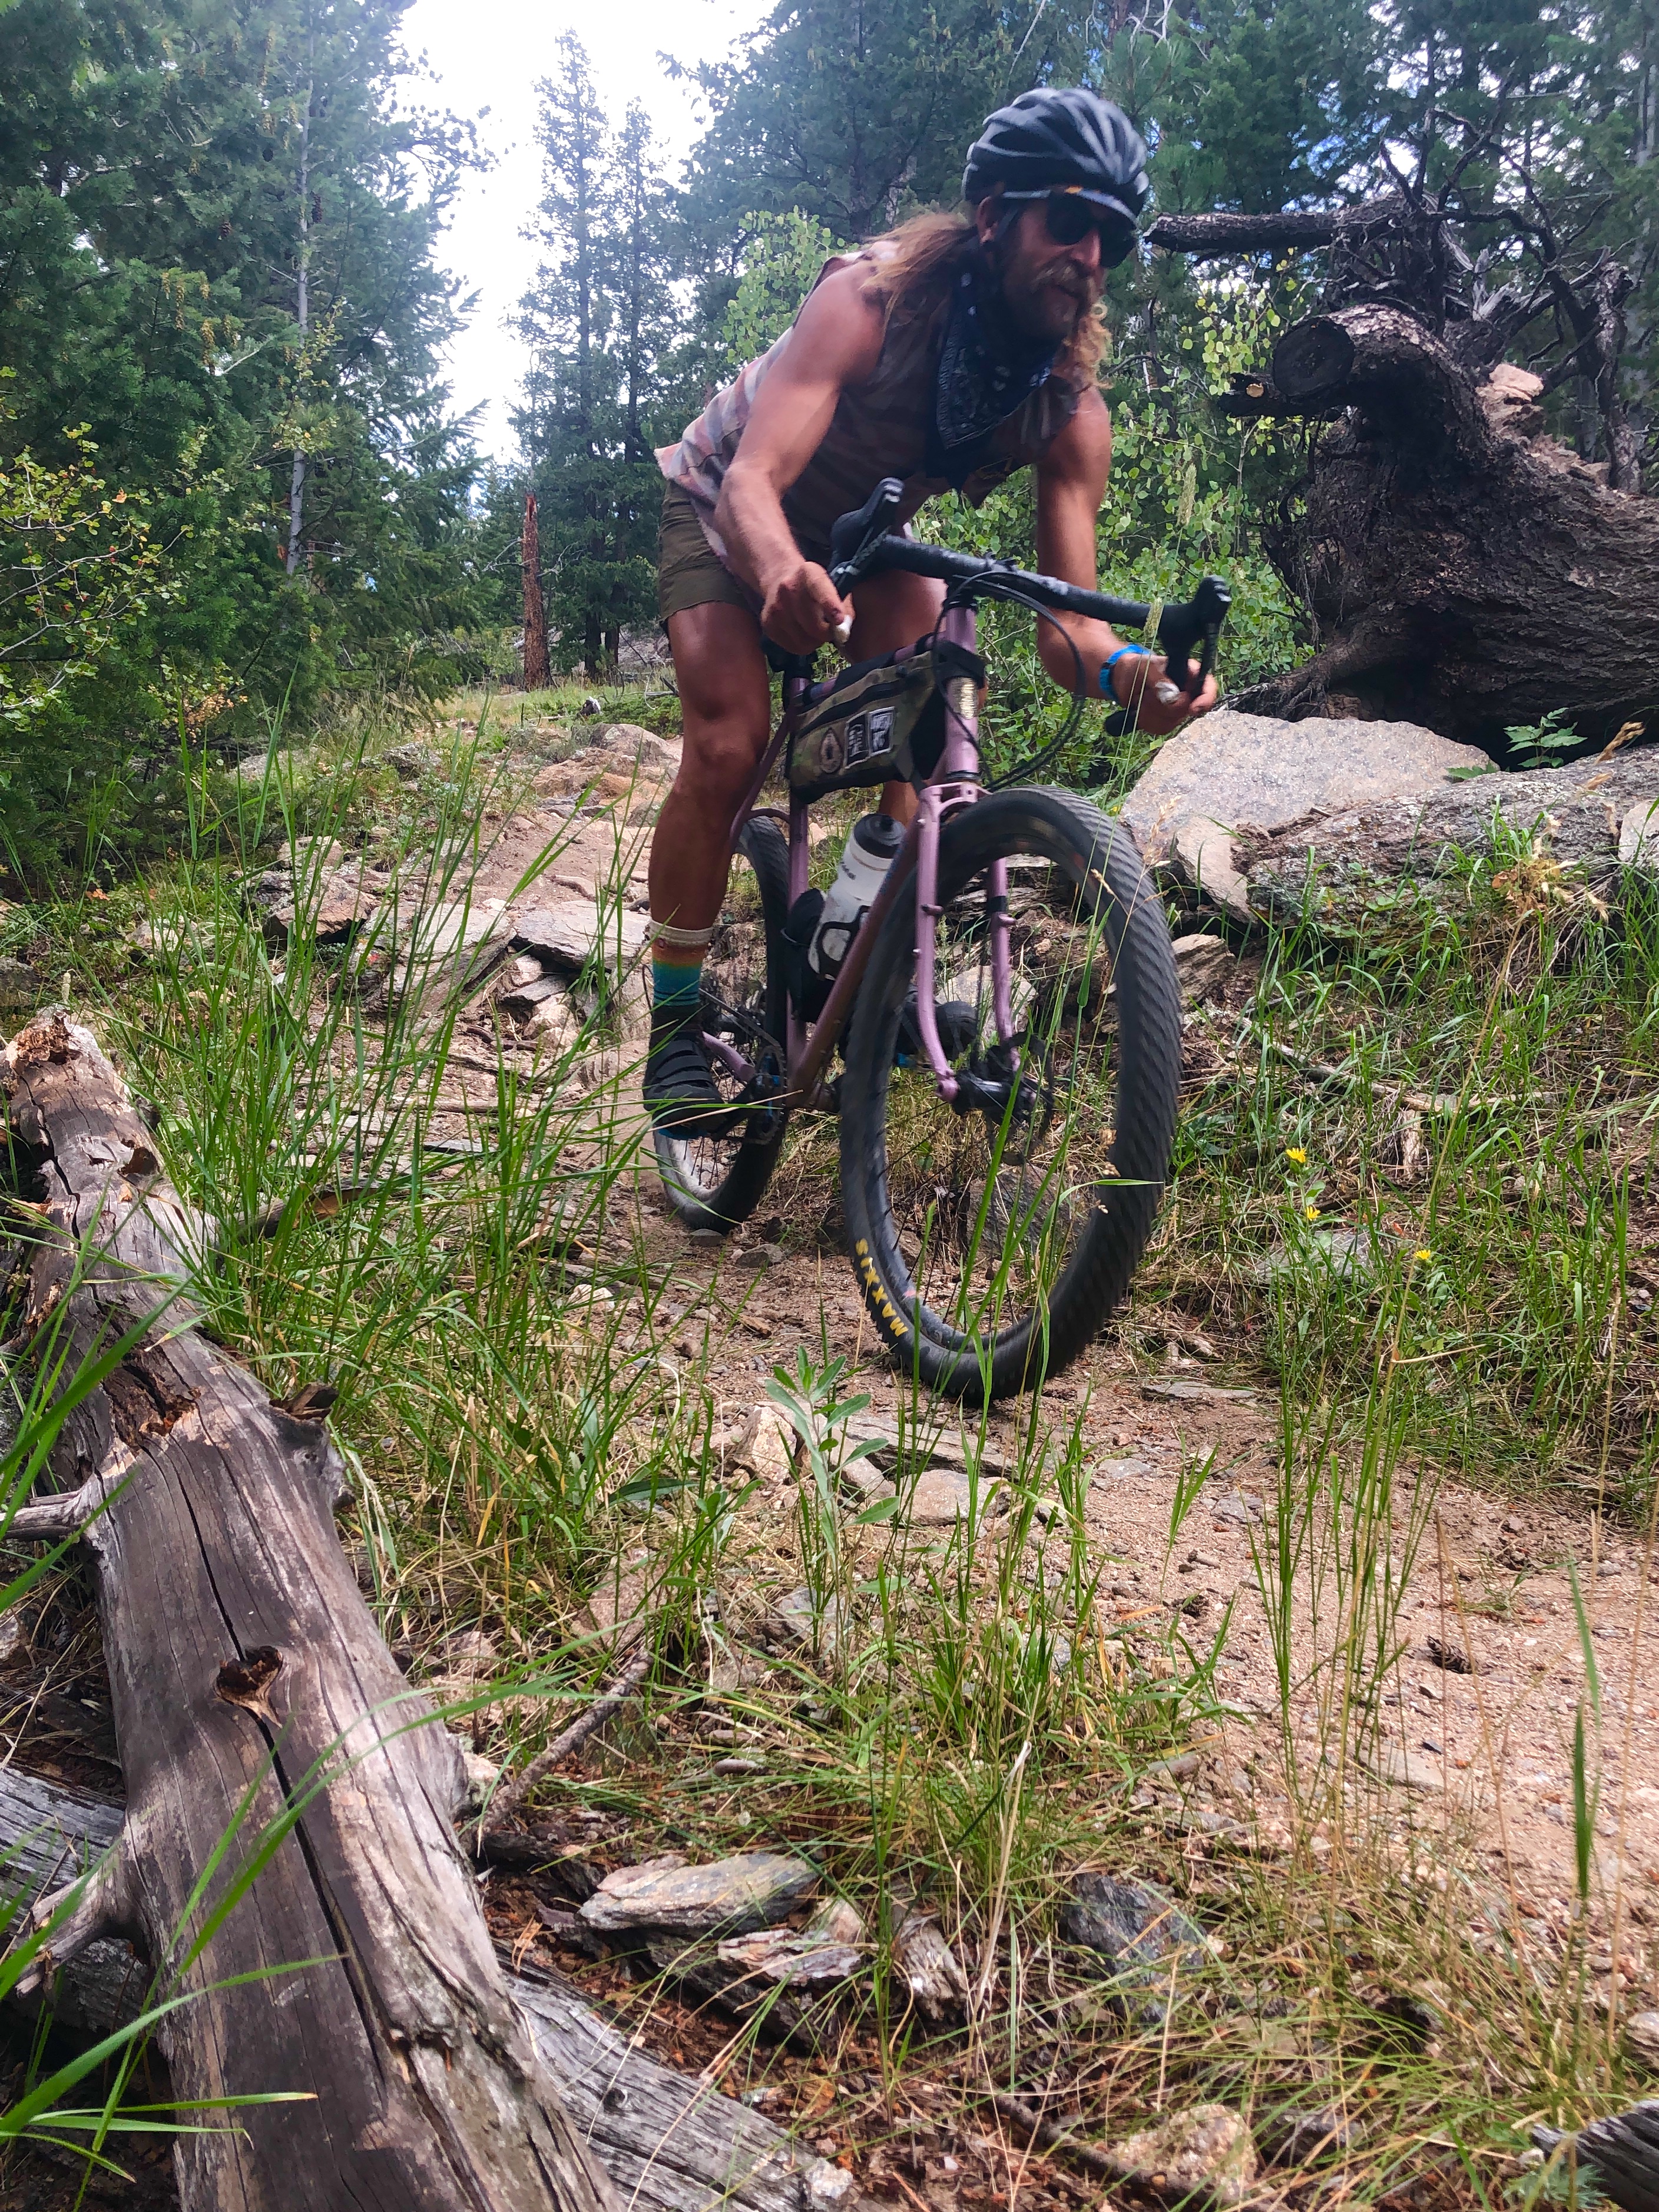 Anton Krupicka, Athlete in Residence, Mountain Bike